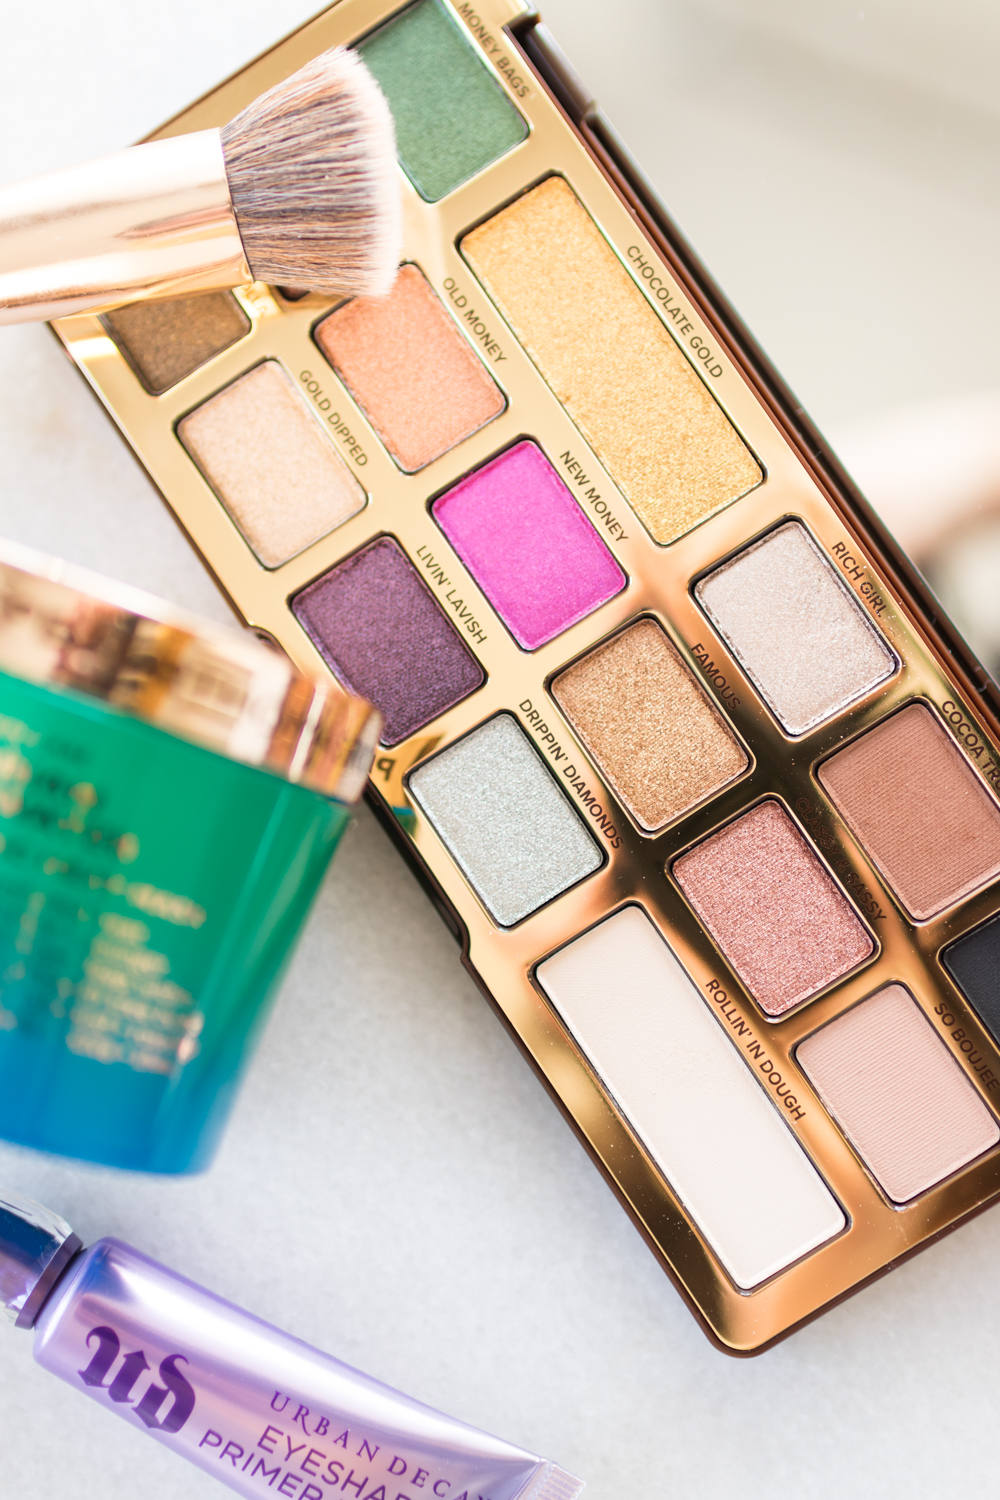 Ulta 21 Days of Beauty Steals | Ulta Sale | 50% off beauty picks | Too Faced Chocolate Gold Eyeshadow Palette